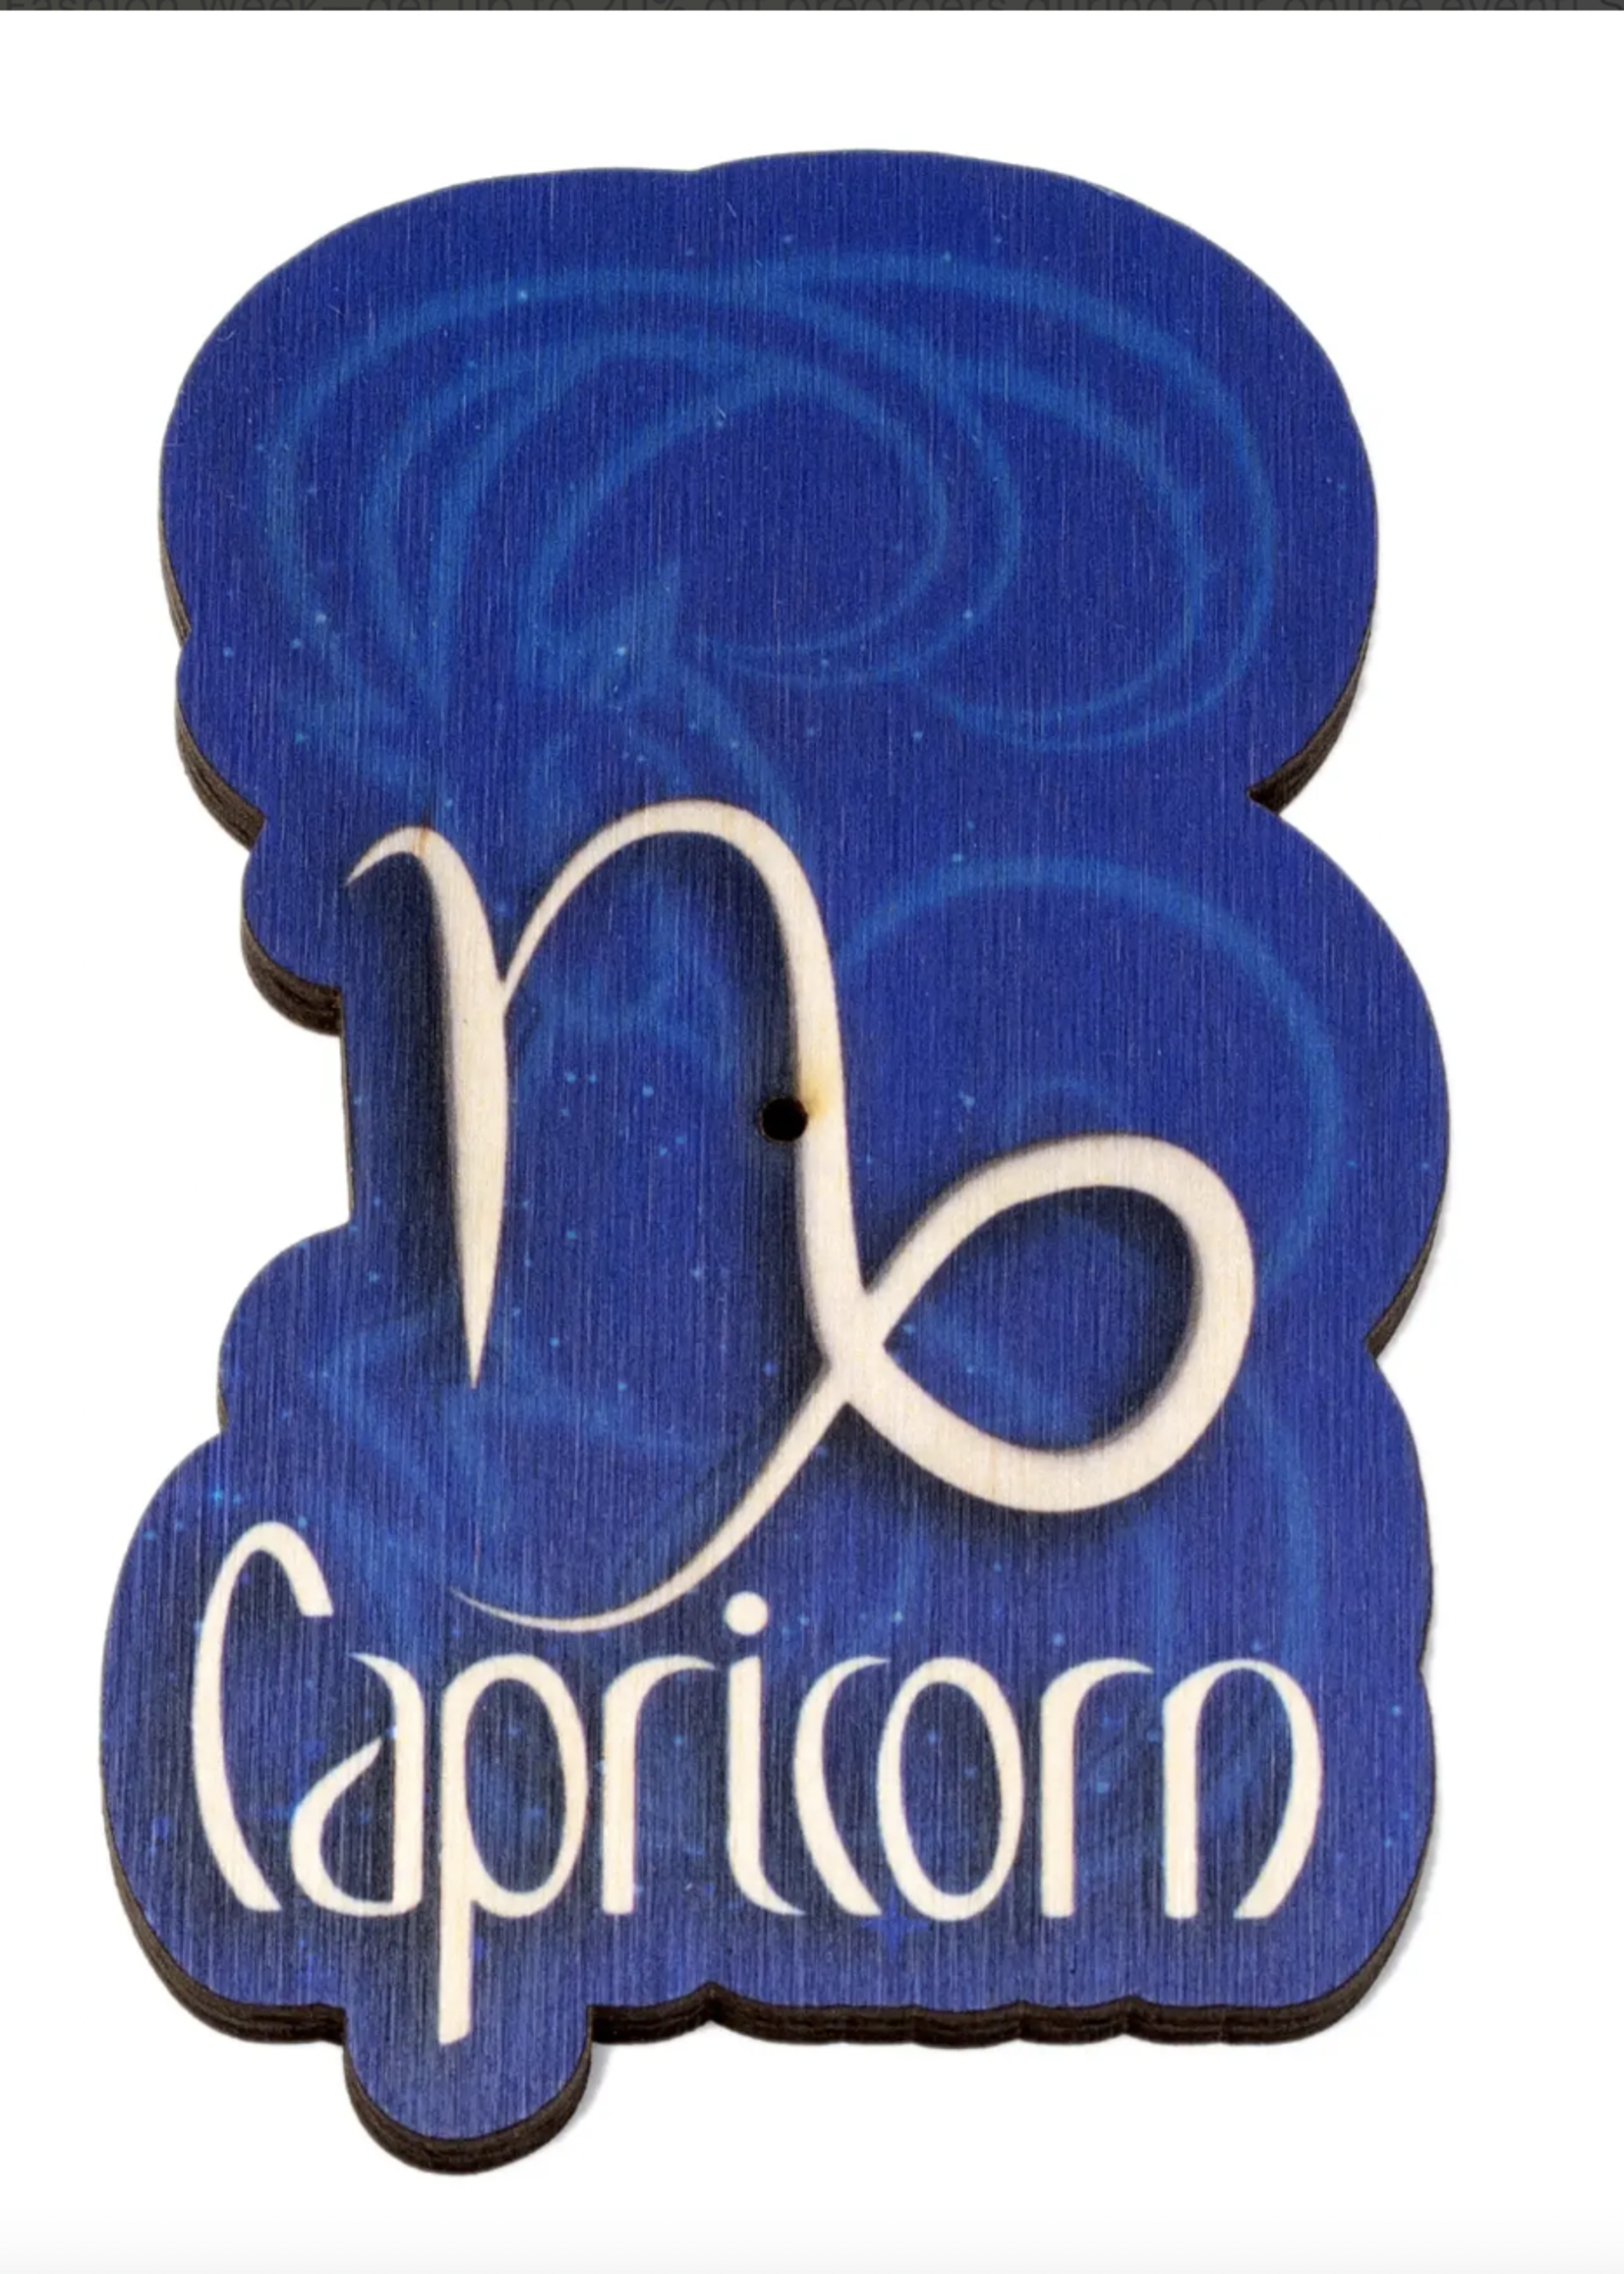 Most Amazing Capricorn Wooden Keychain